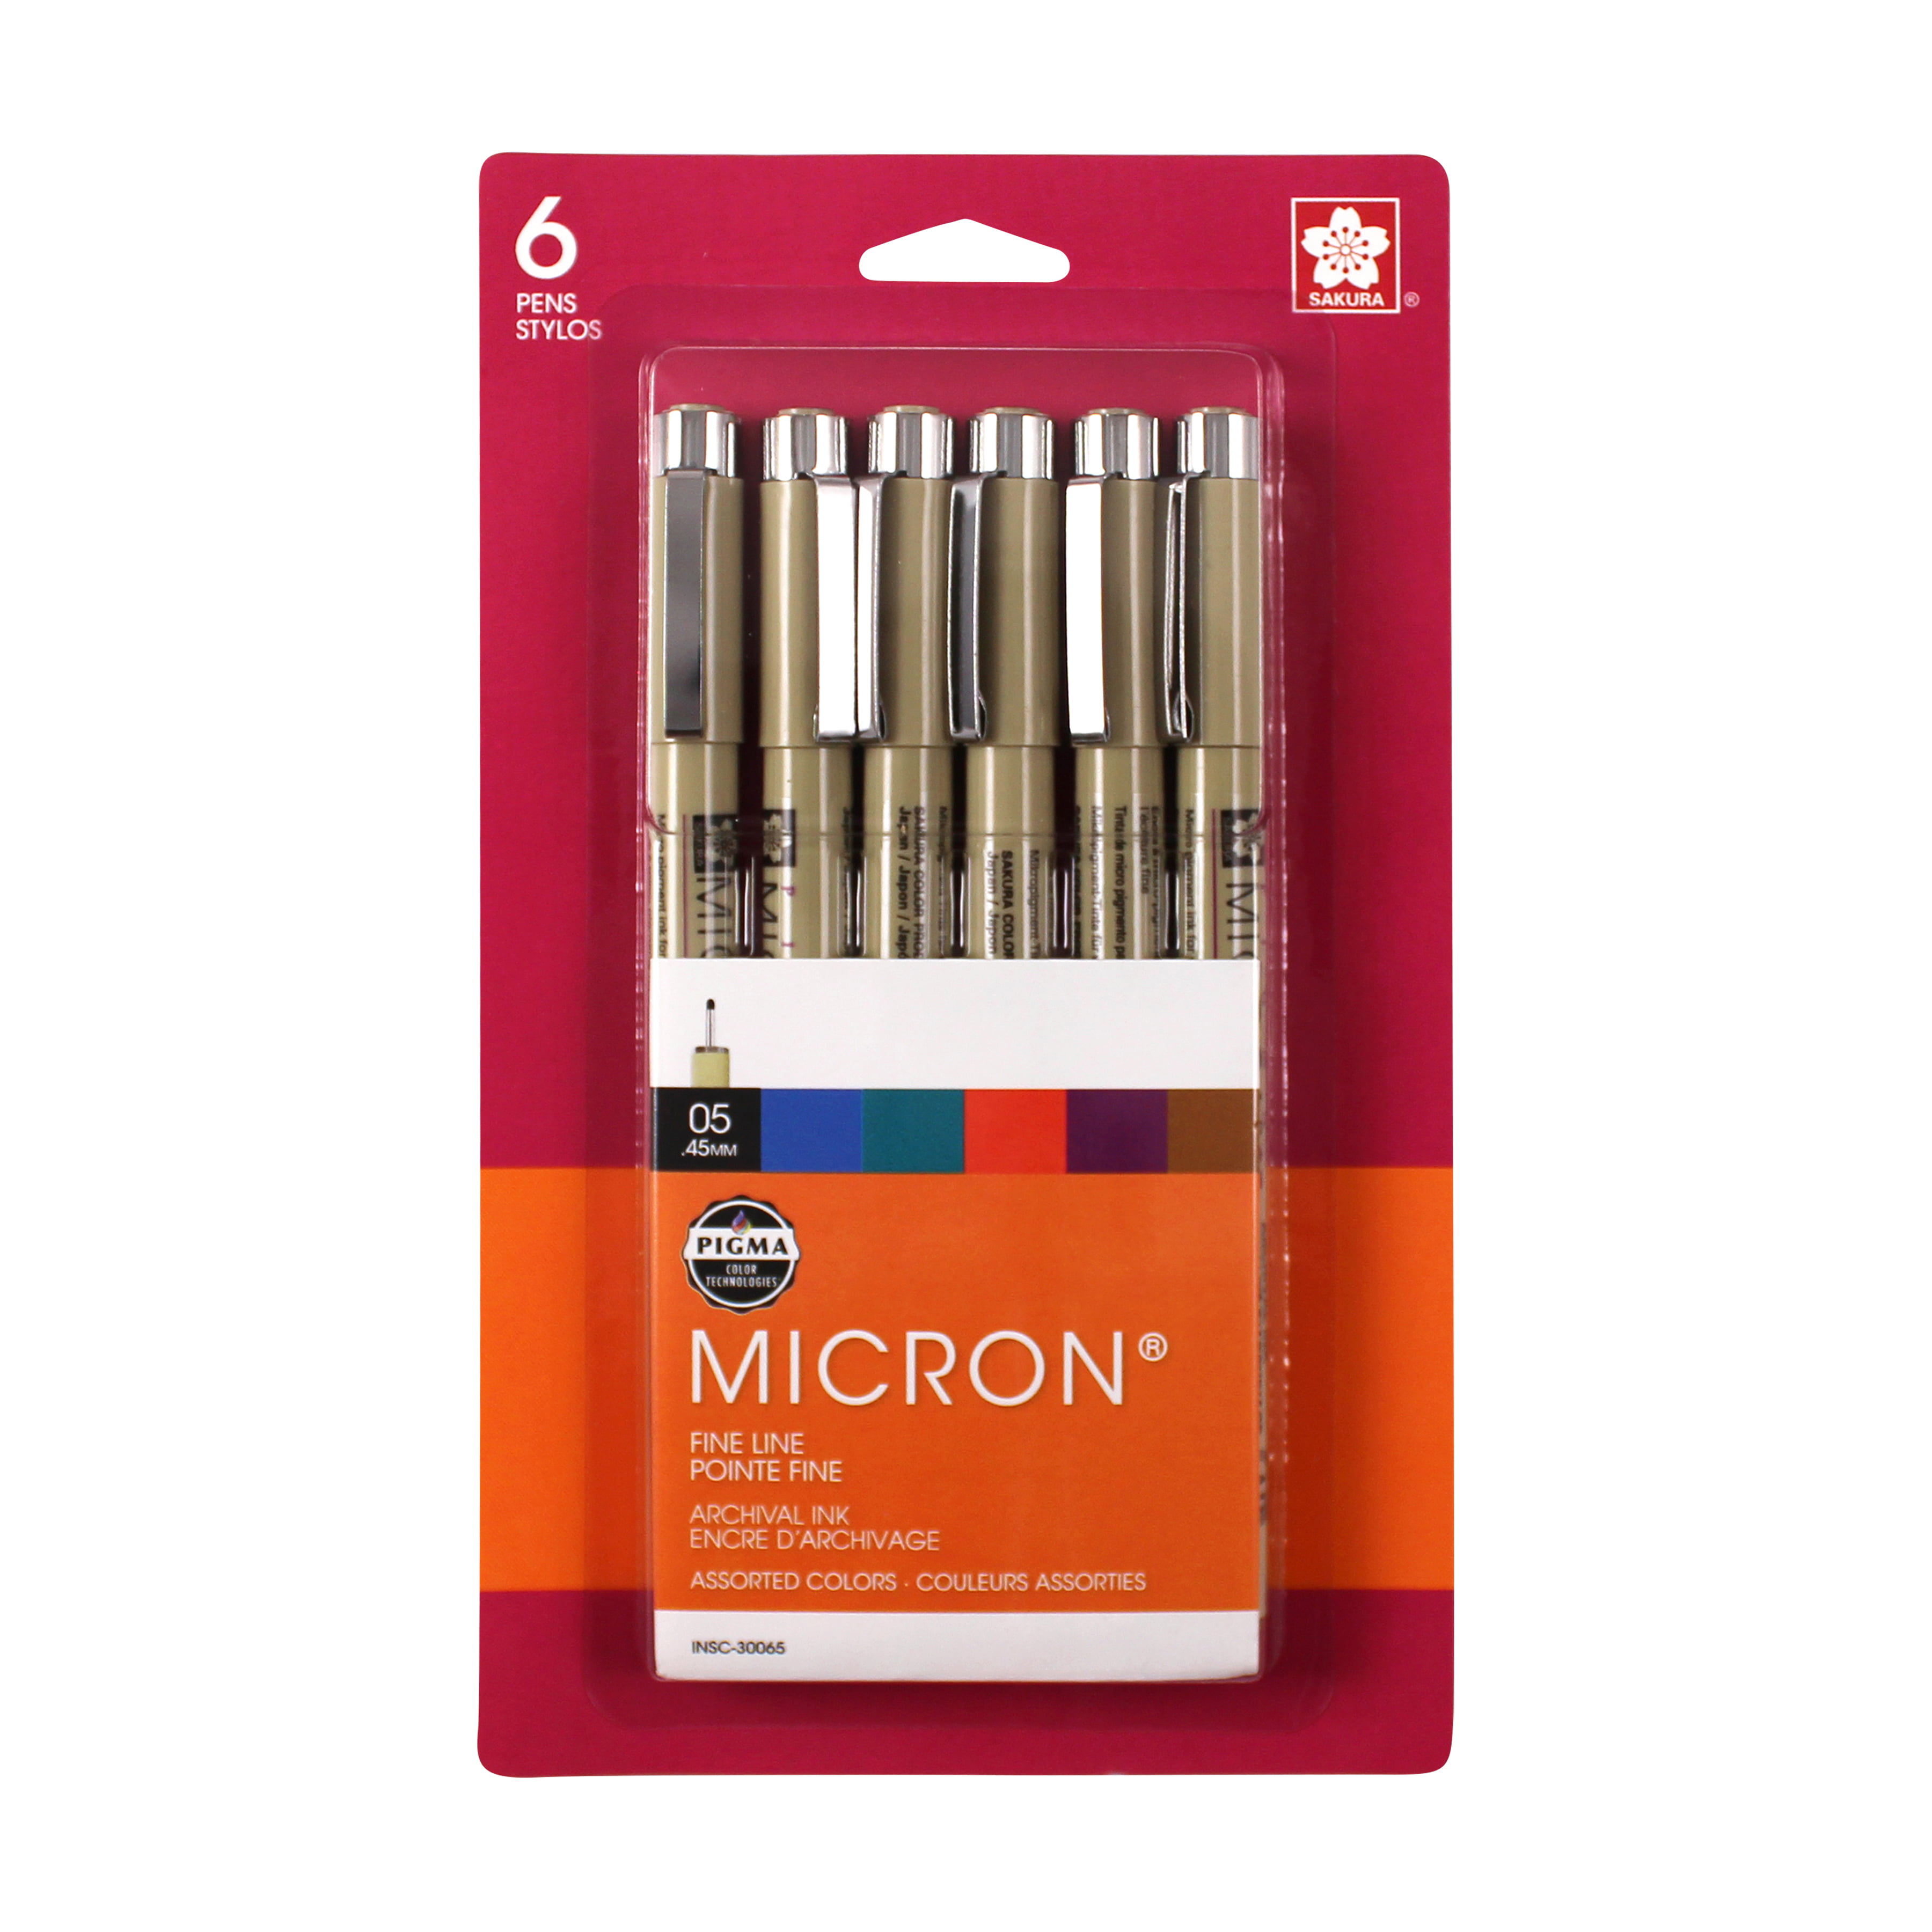 Pigma Fineliner Pens, Archival Black Multi Tip Sizes, 6 Pack Walmart.com